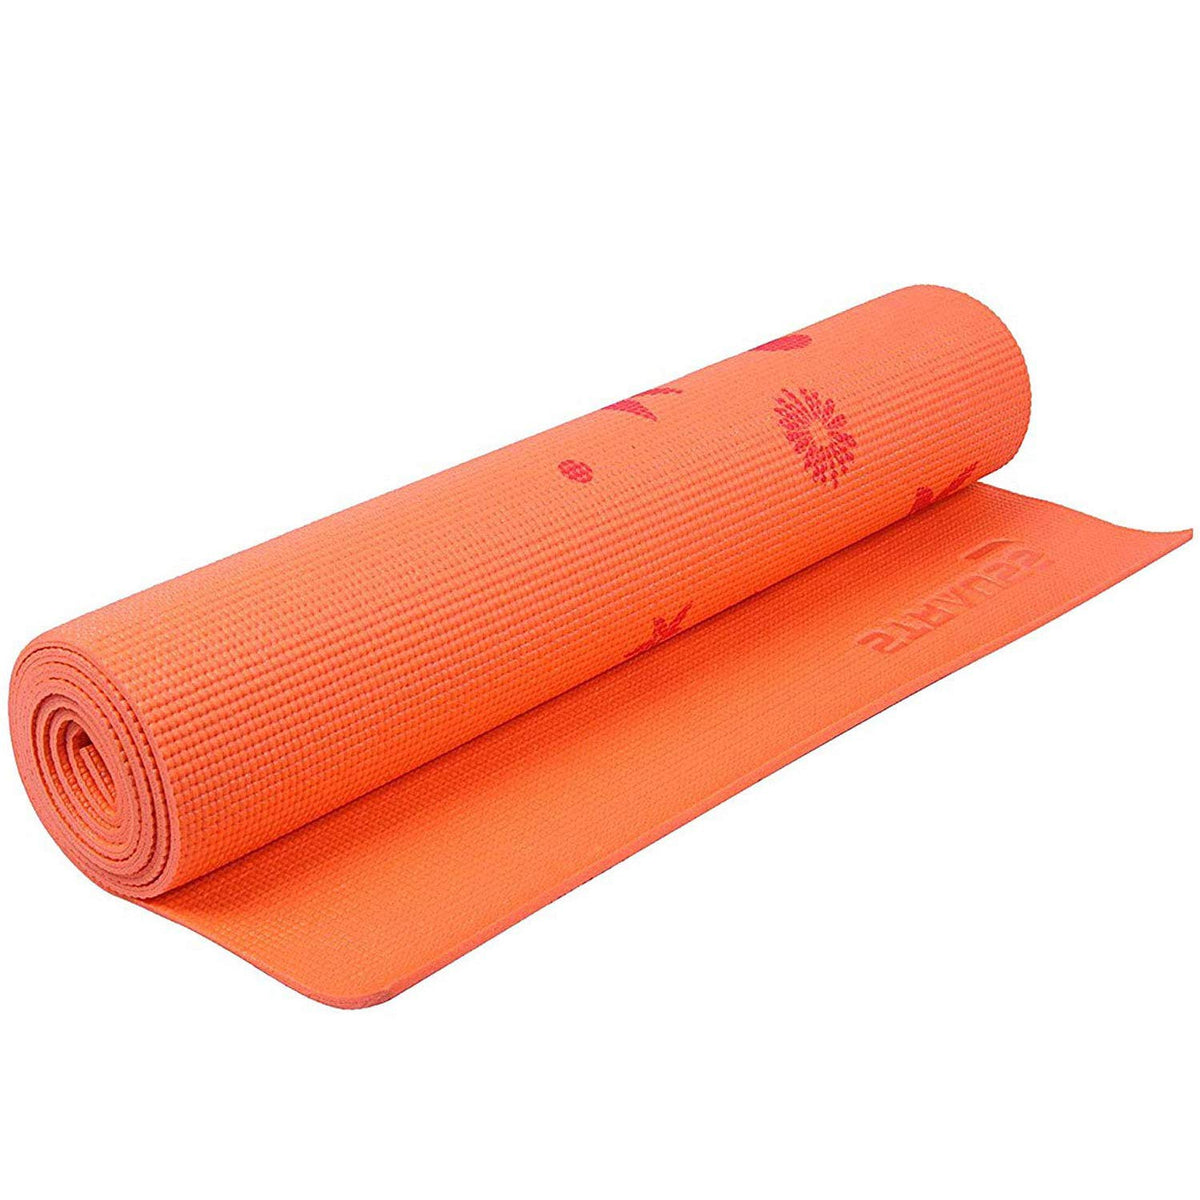 Strauss Yoga Mat Floral, 6 mm (Orange)